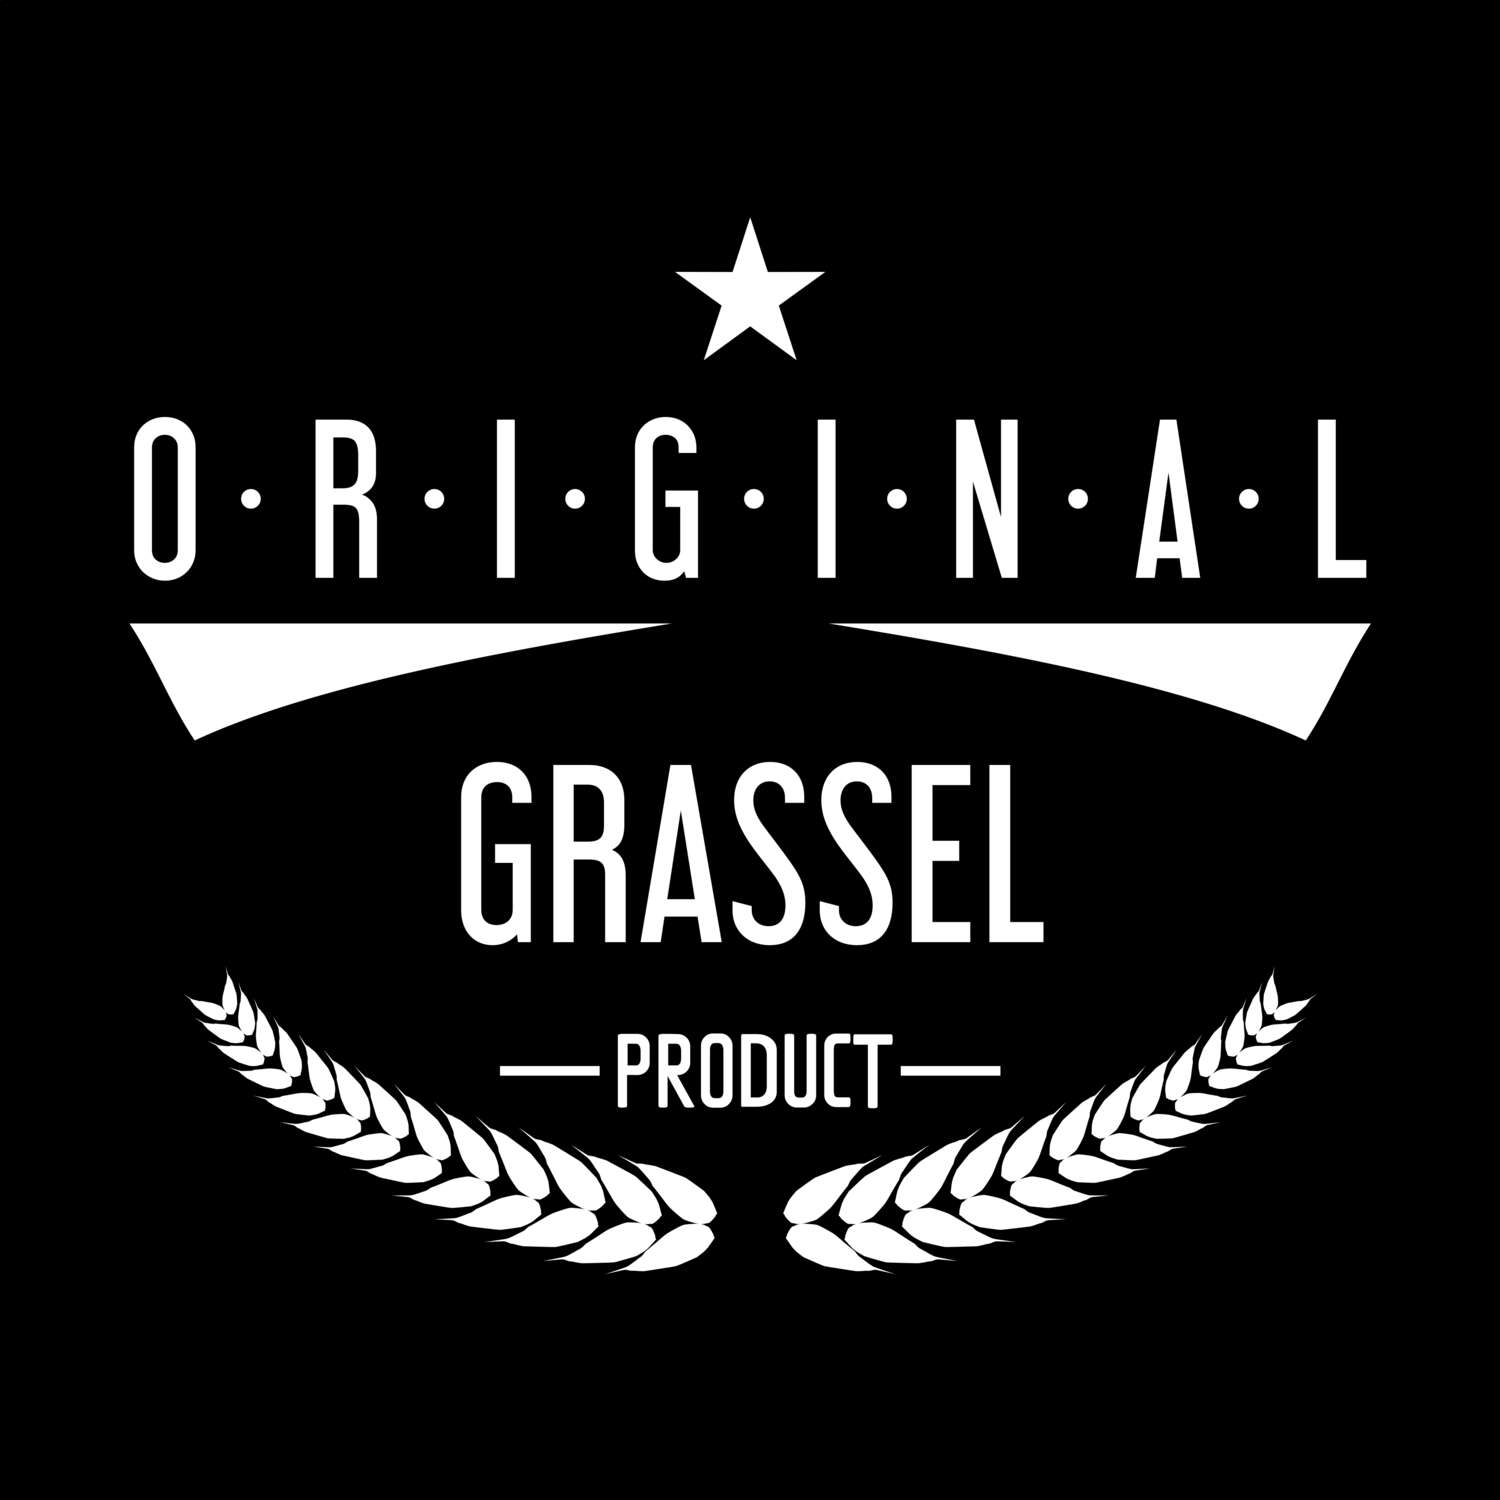 Grassel T-Shirt »Original Product«